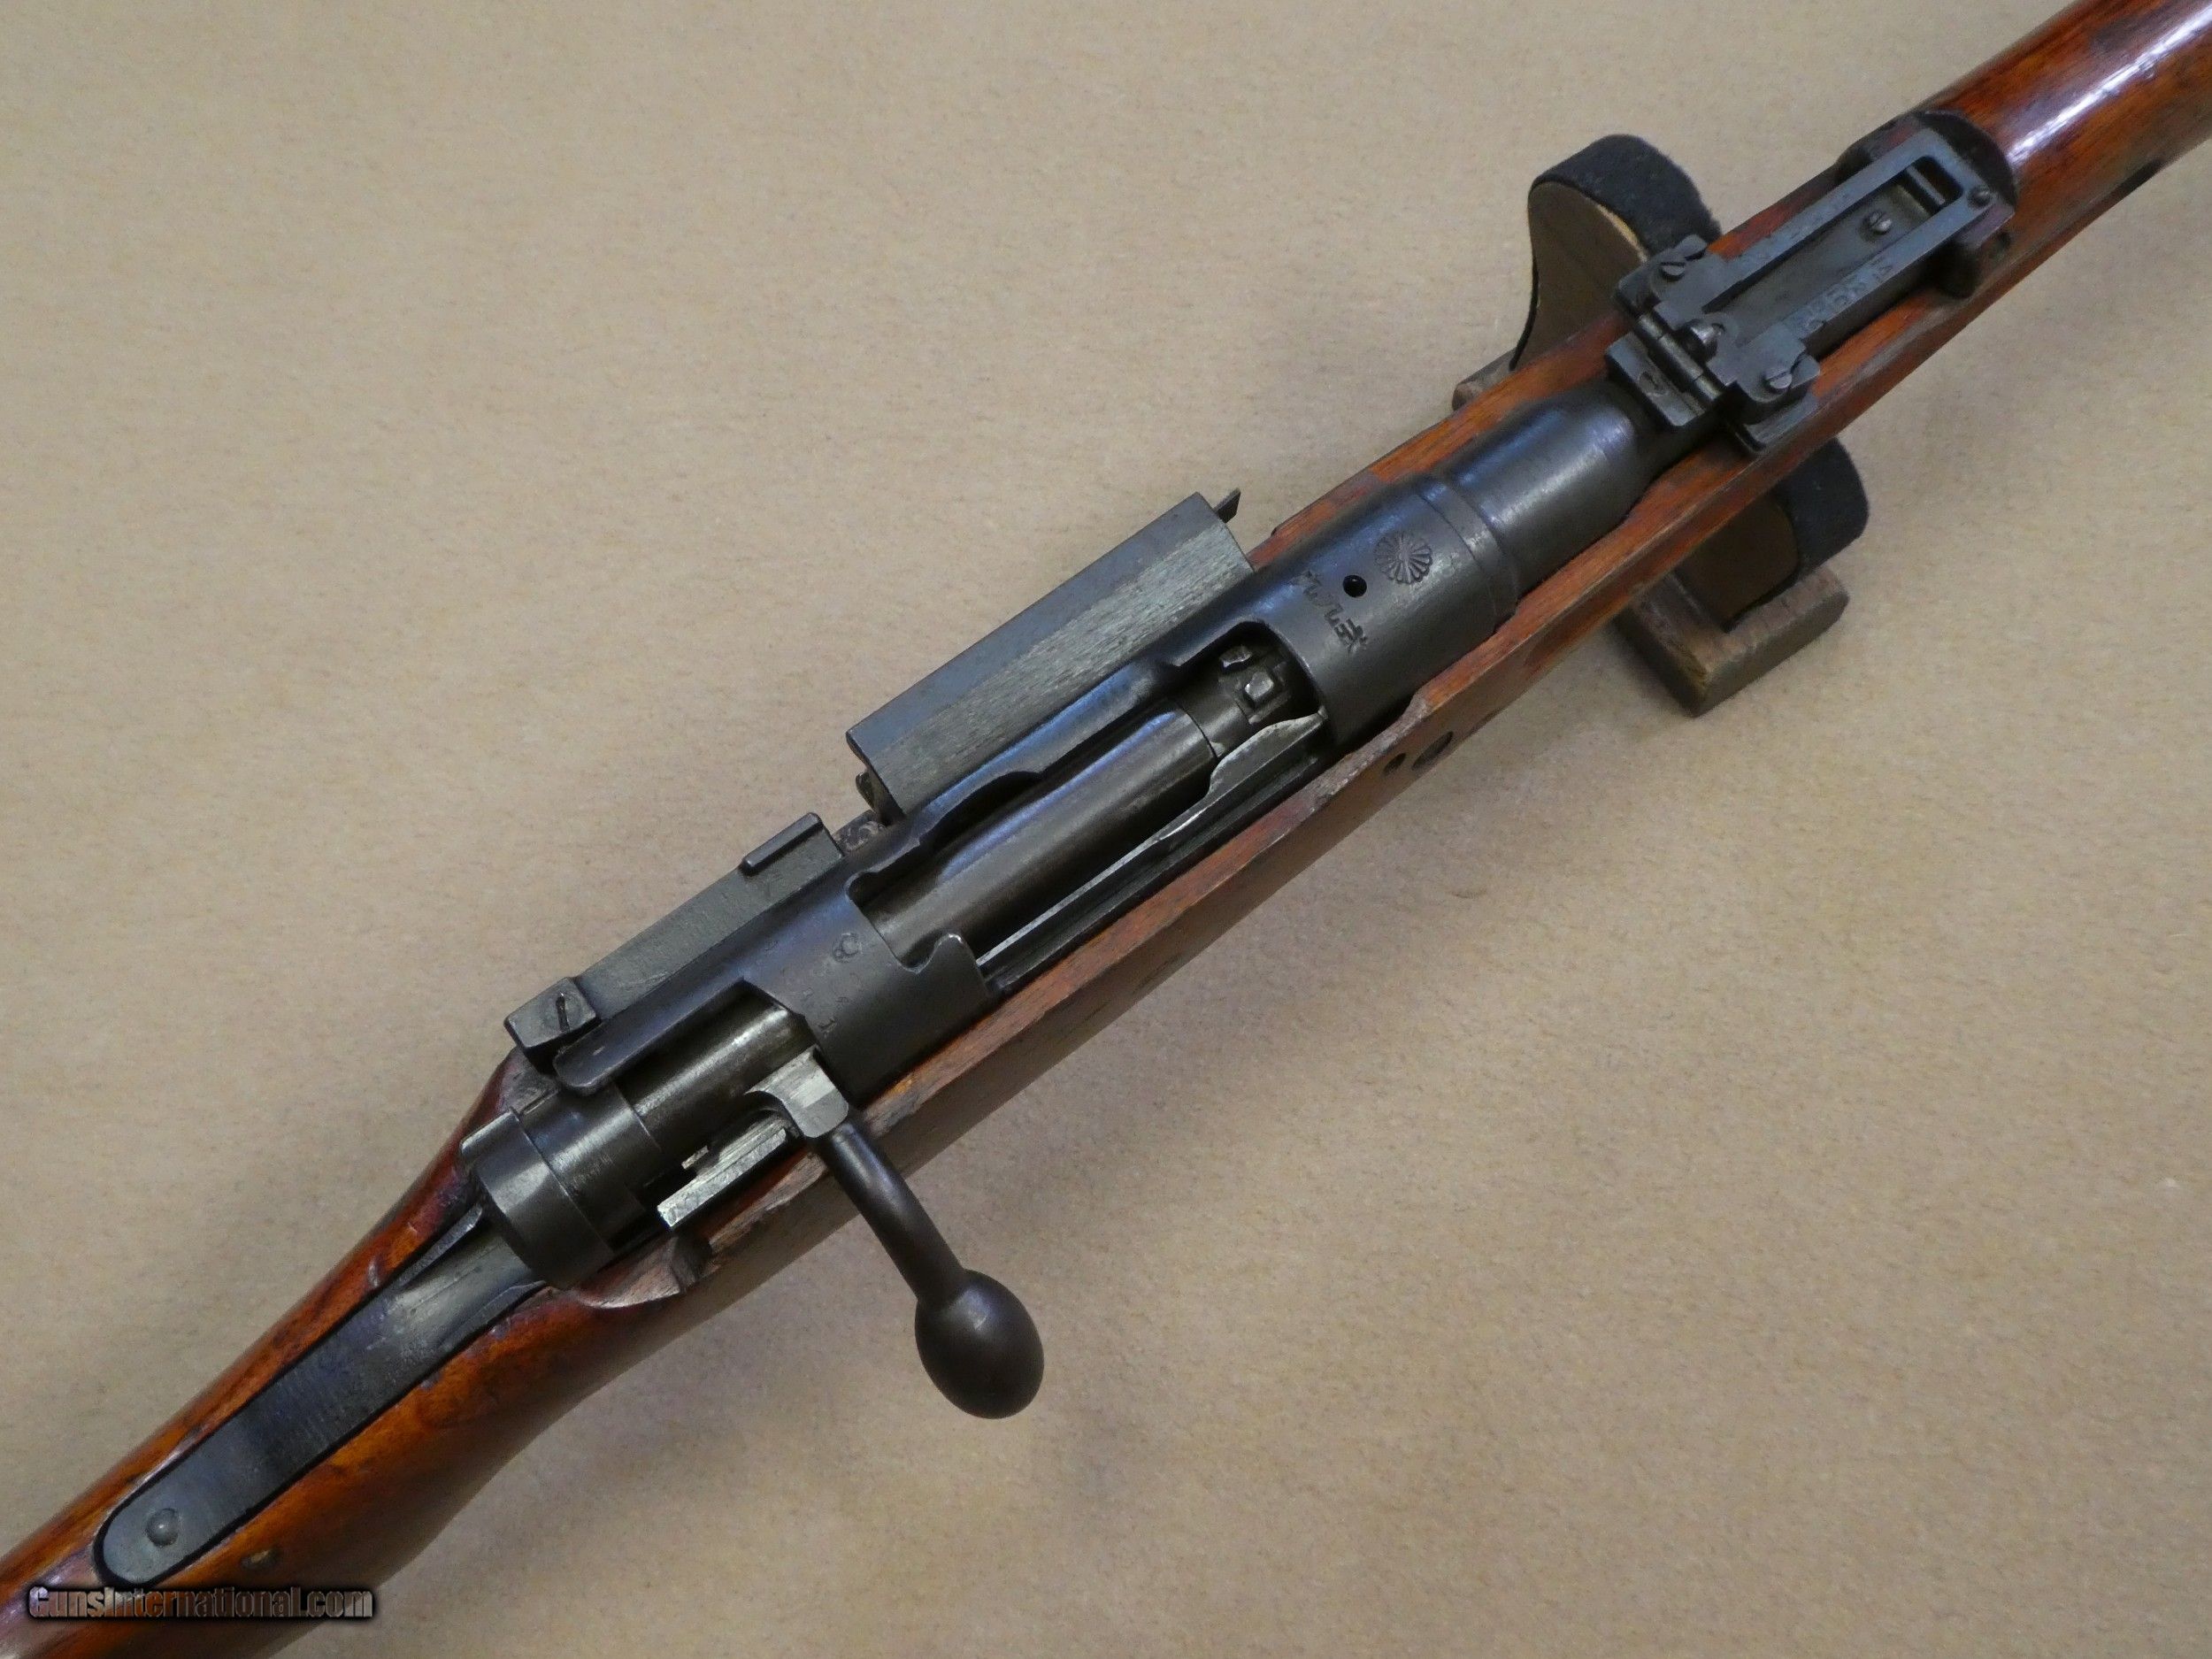 Ww2 Japanese Rifle